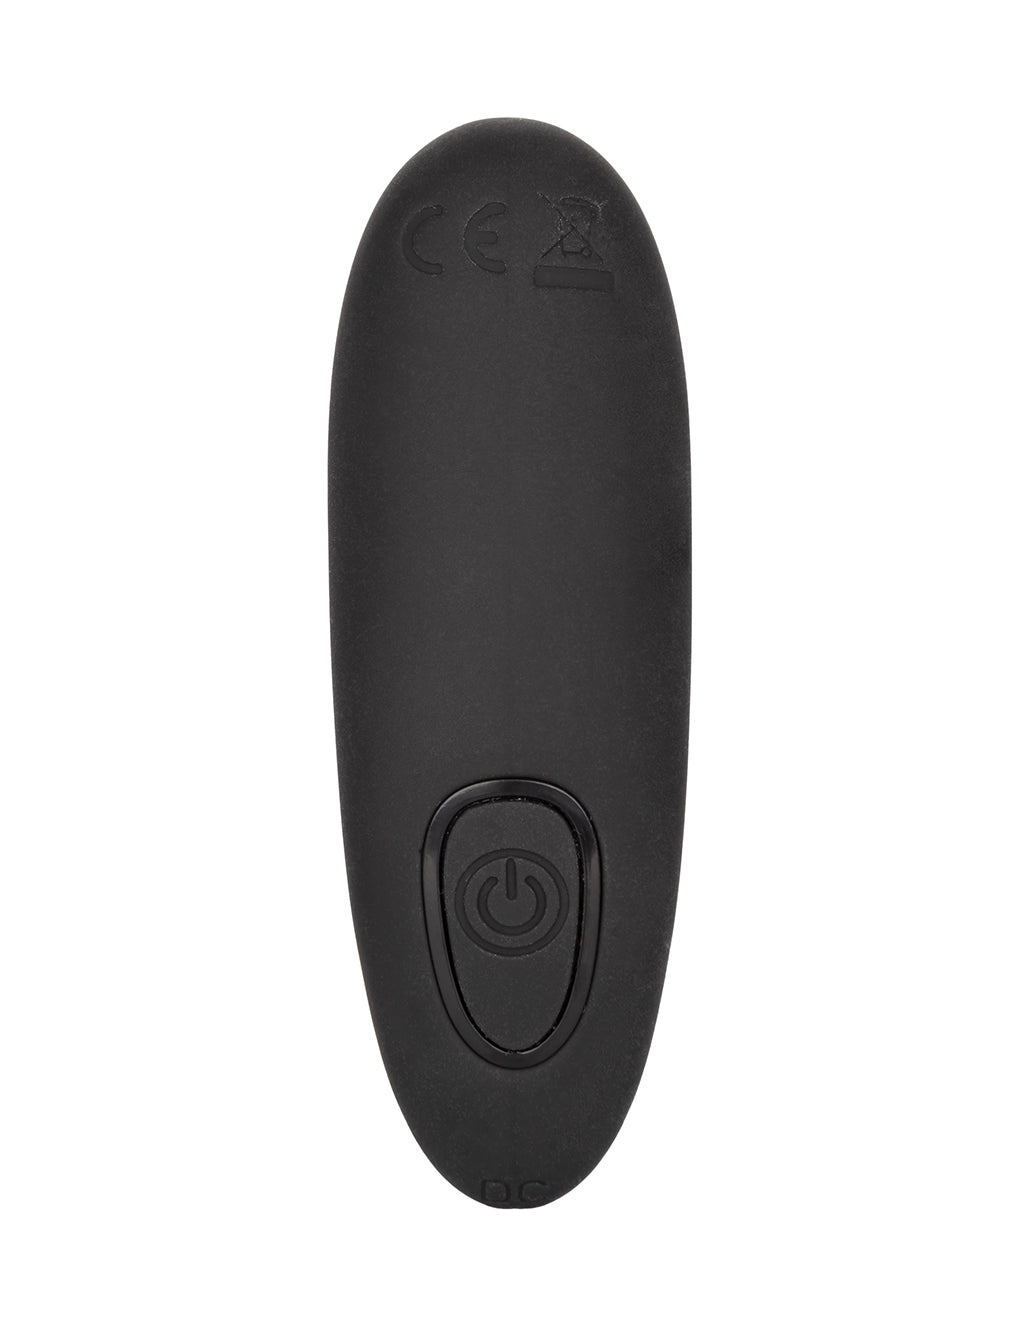 HUSTLER® Playthings Remote Control Panty- Vibrator- Bottom- Power Button